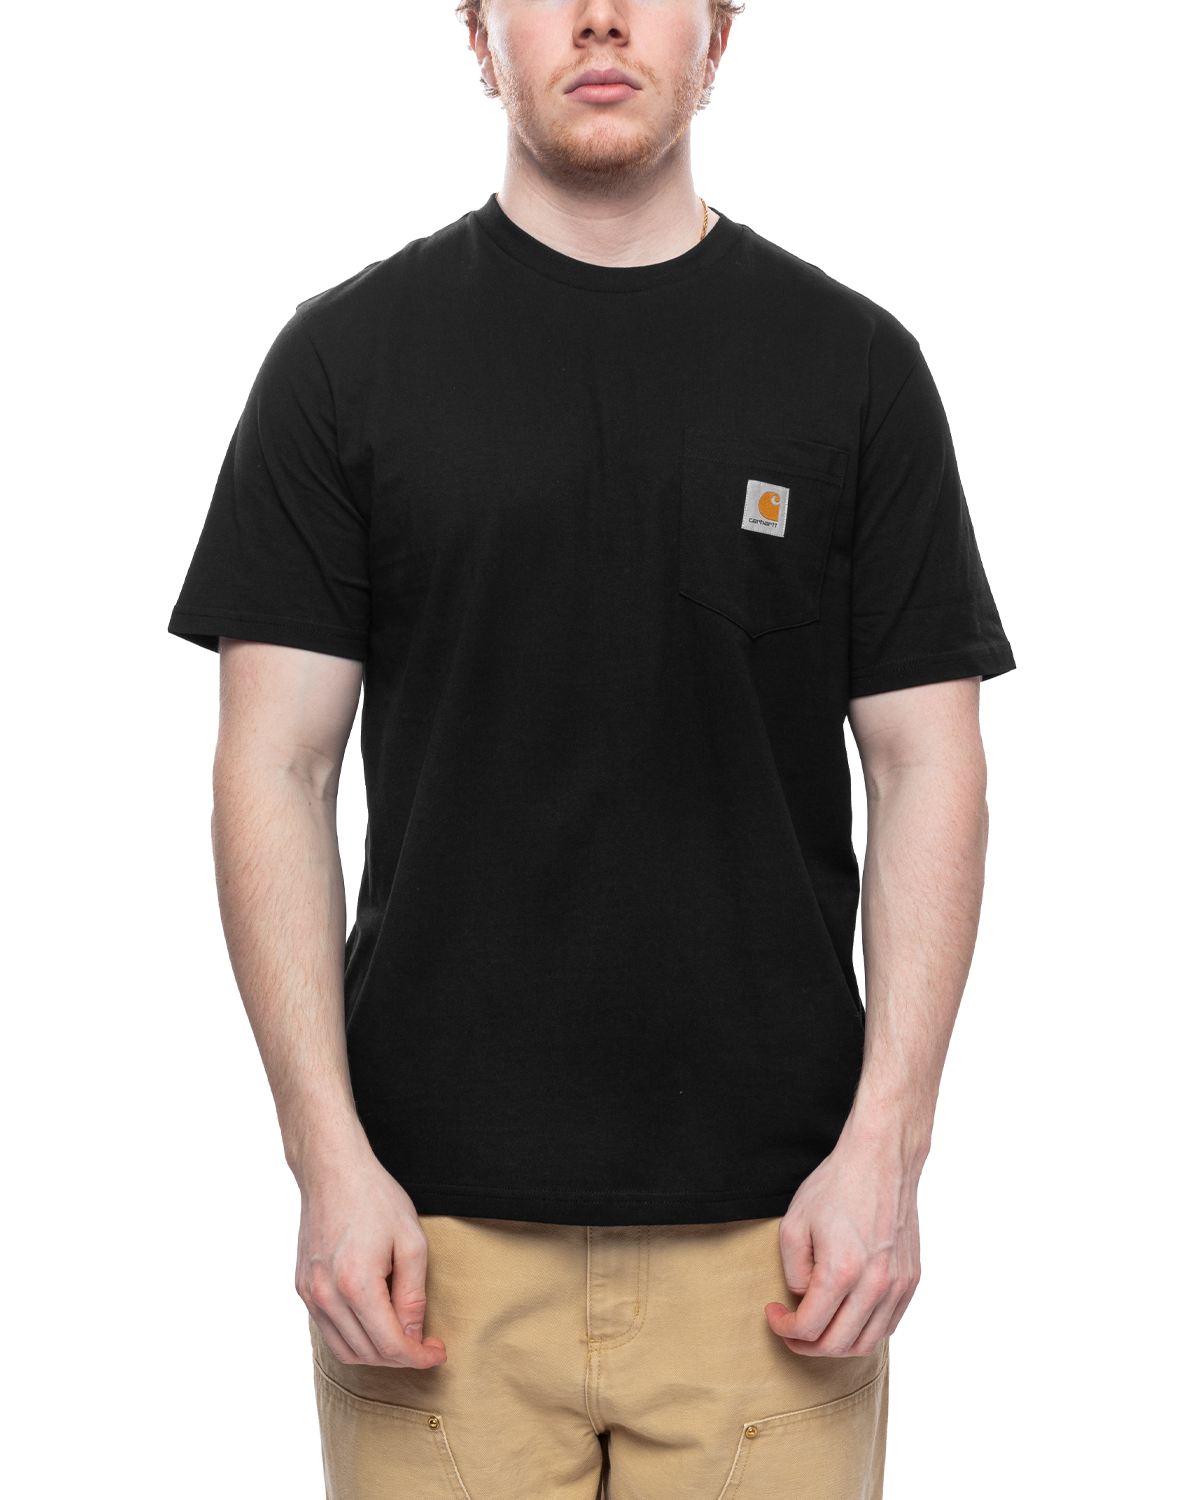 S/S Pocket T-Shirt Black